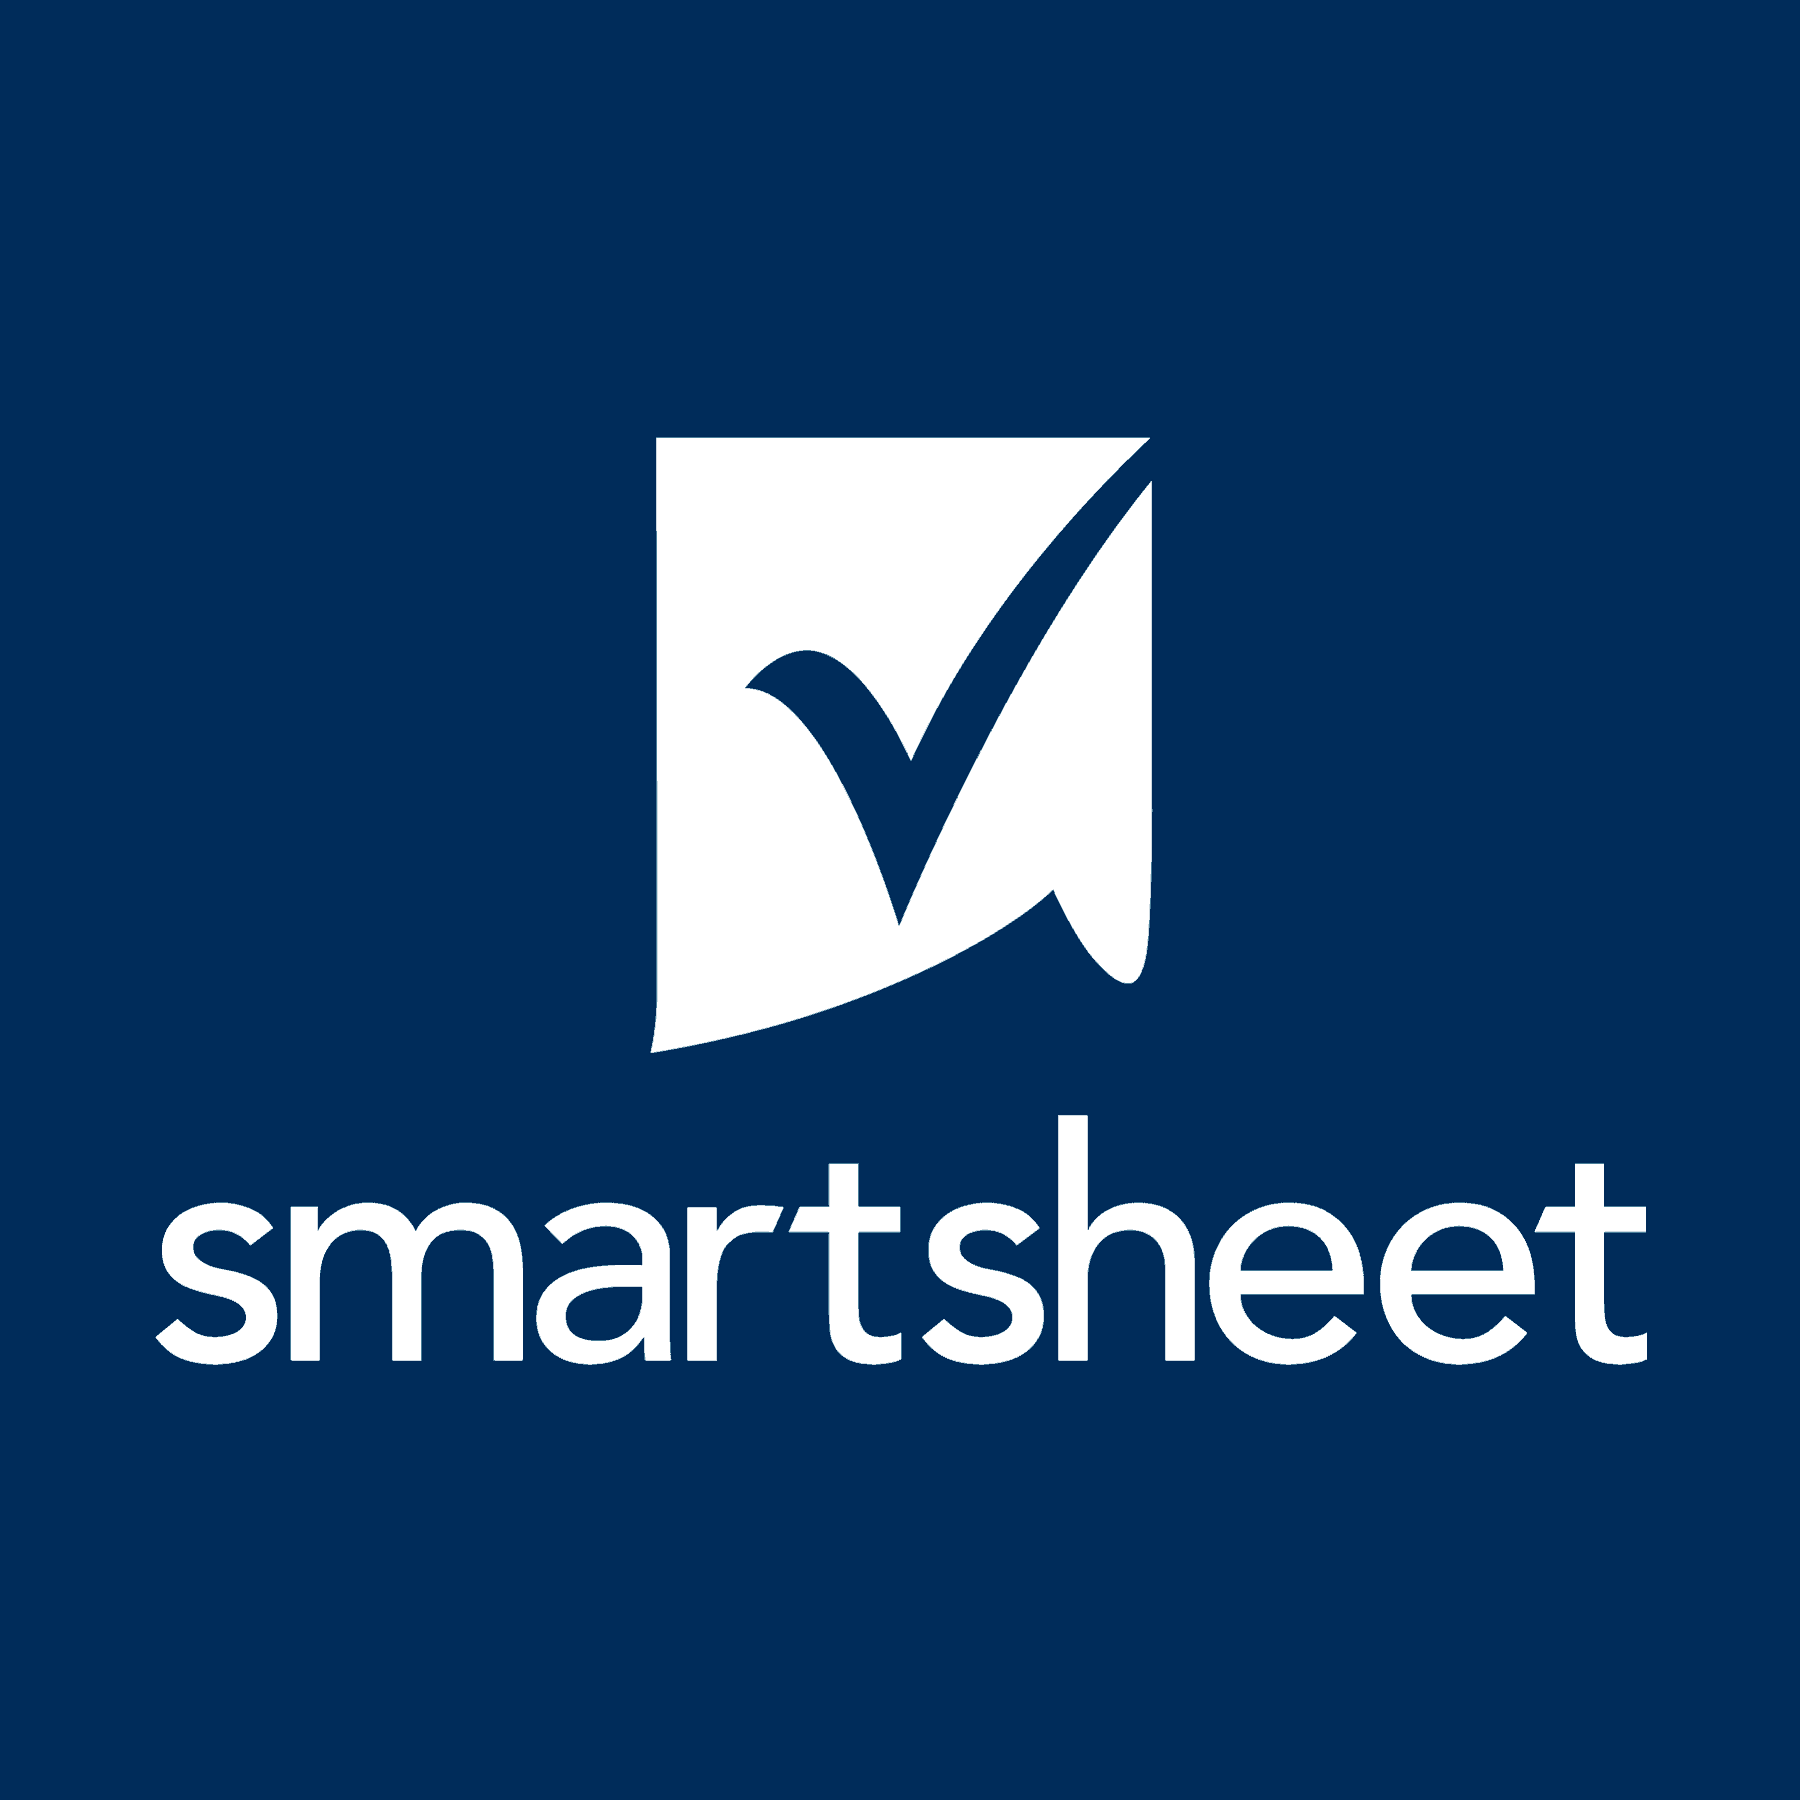 smartsheet-logo-vertical-square